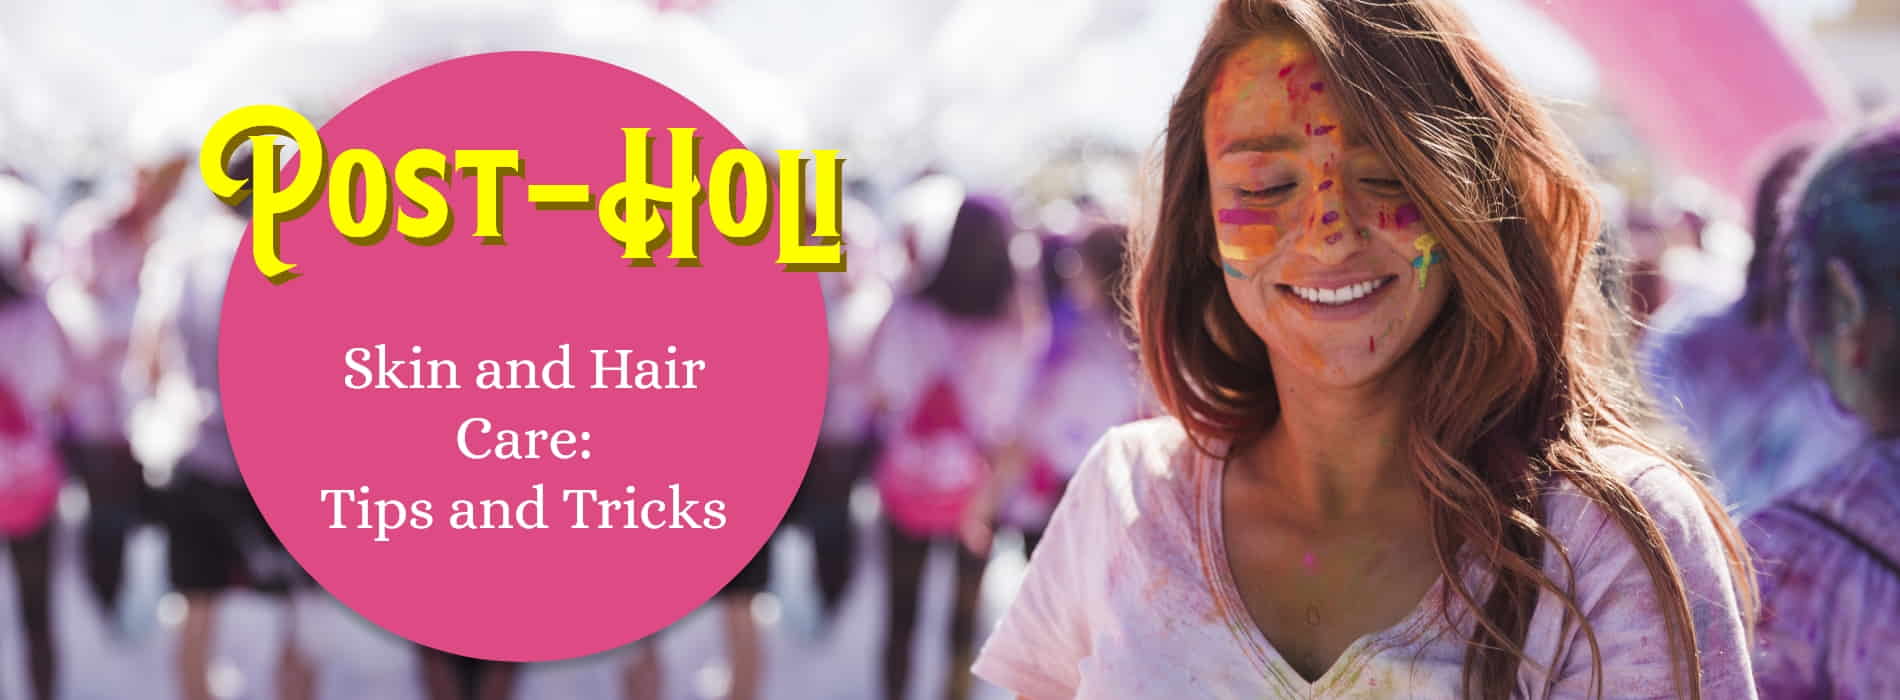 Post-Holi-Skin-and-Hair-Care-Tips-and-Tricks-viraasi